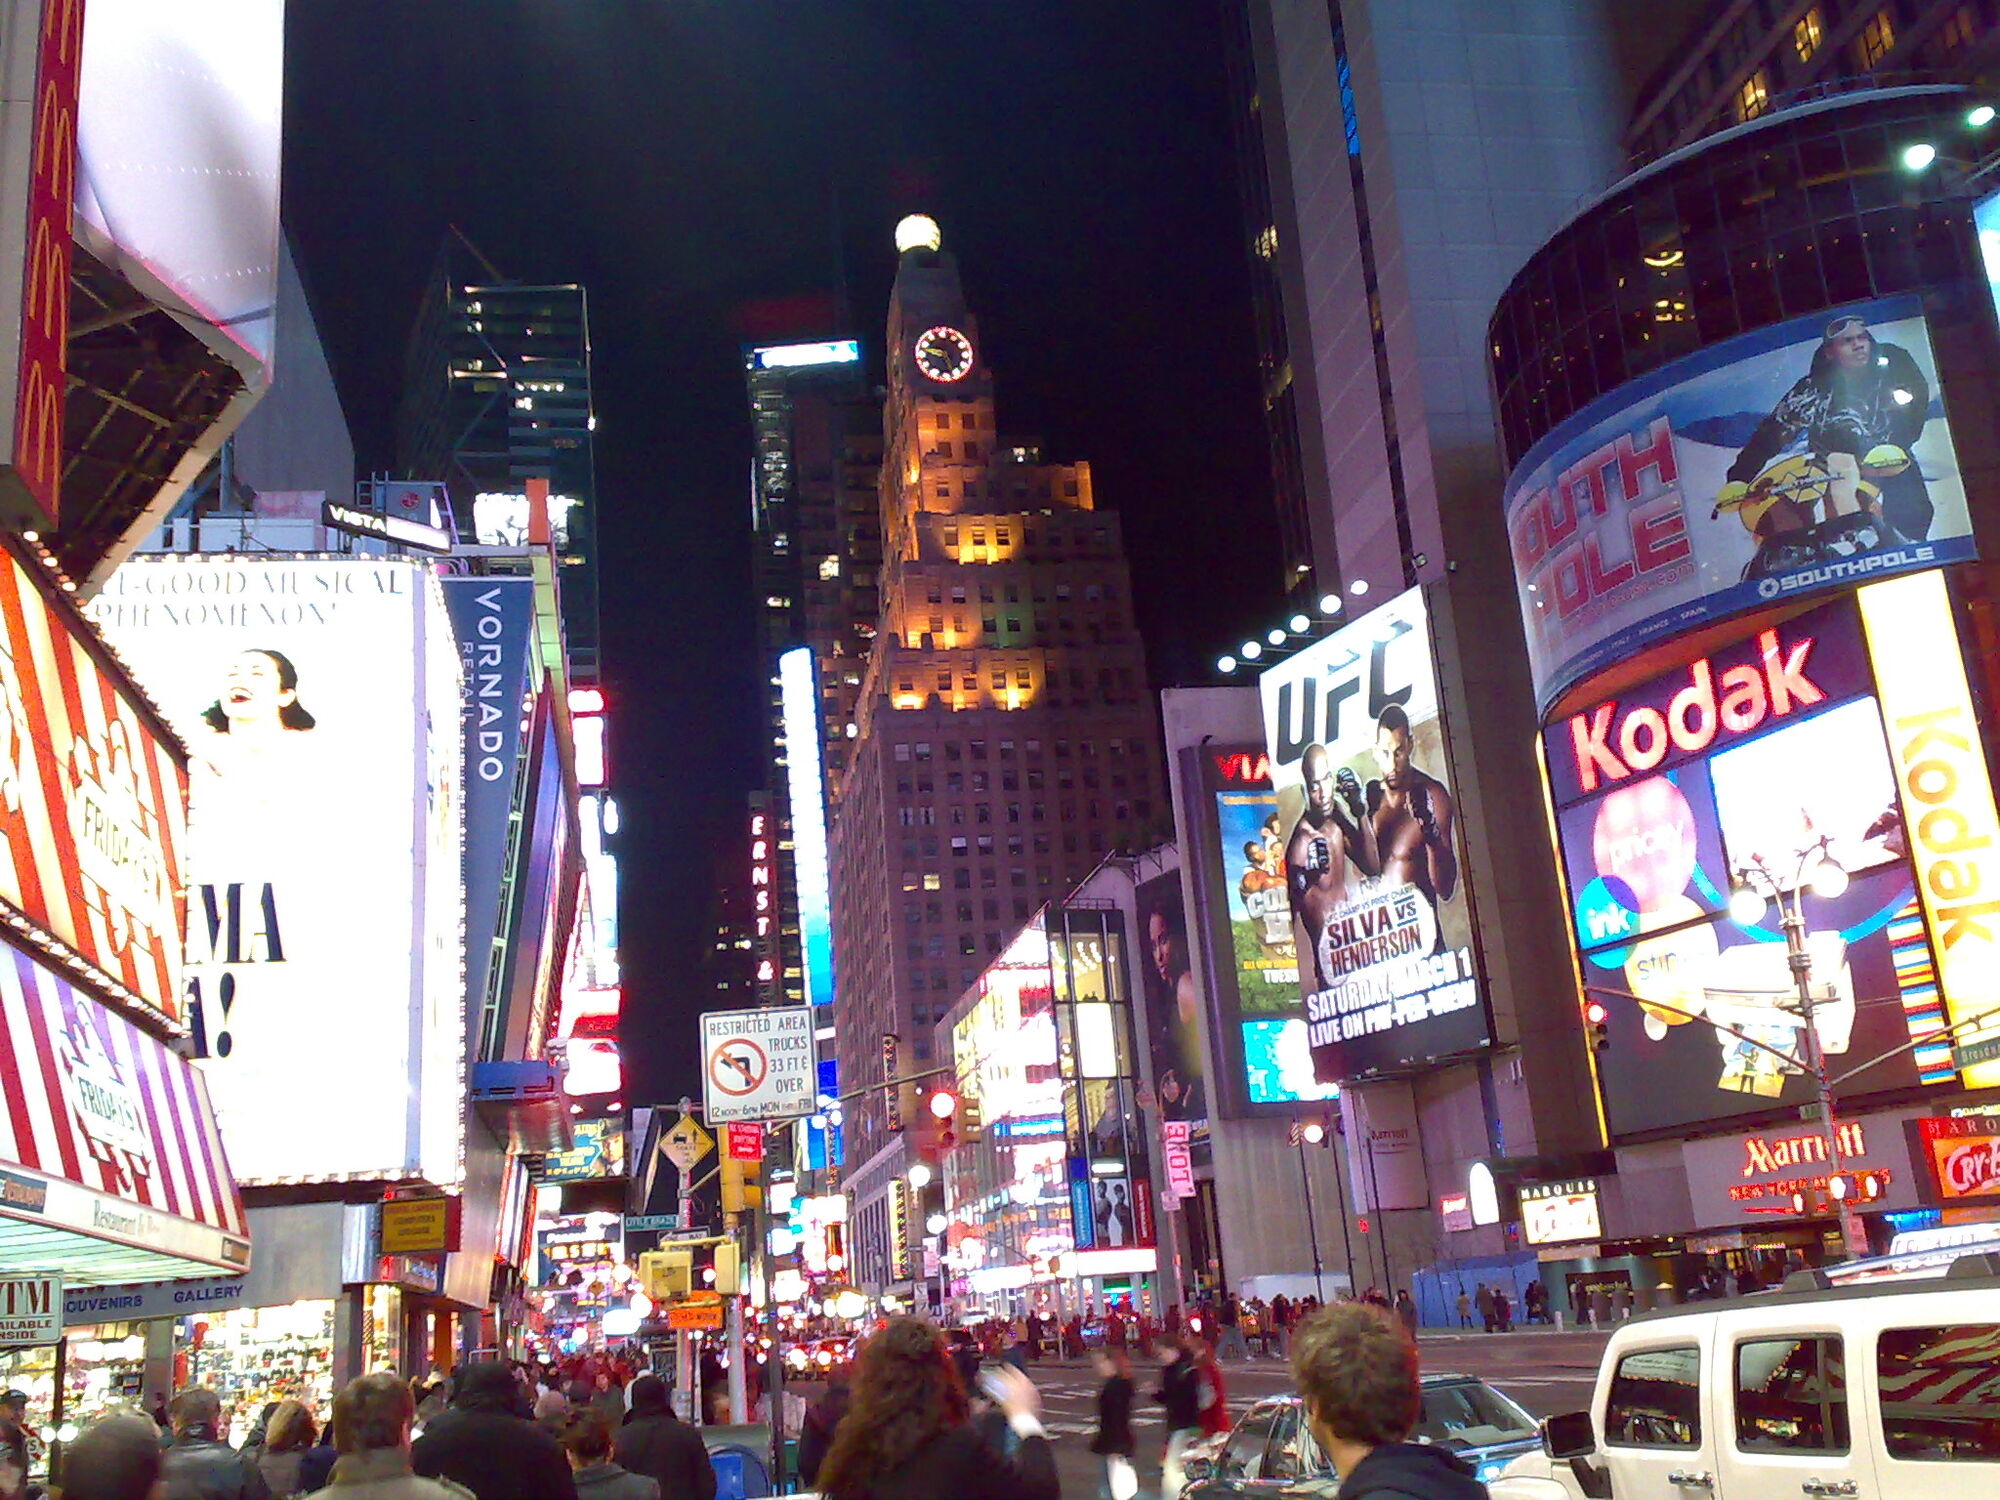 Glittering lights everywhere - Broadway?